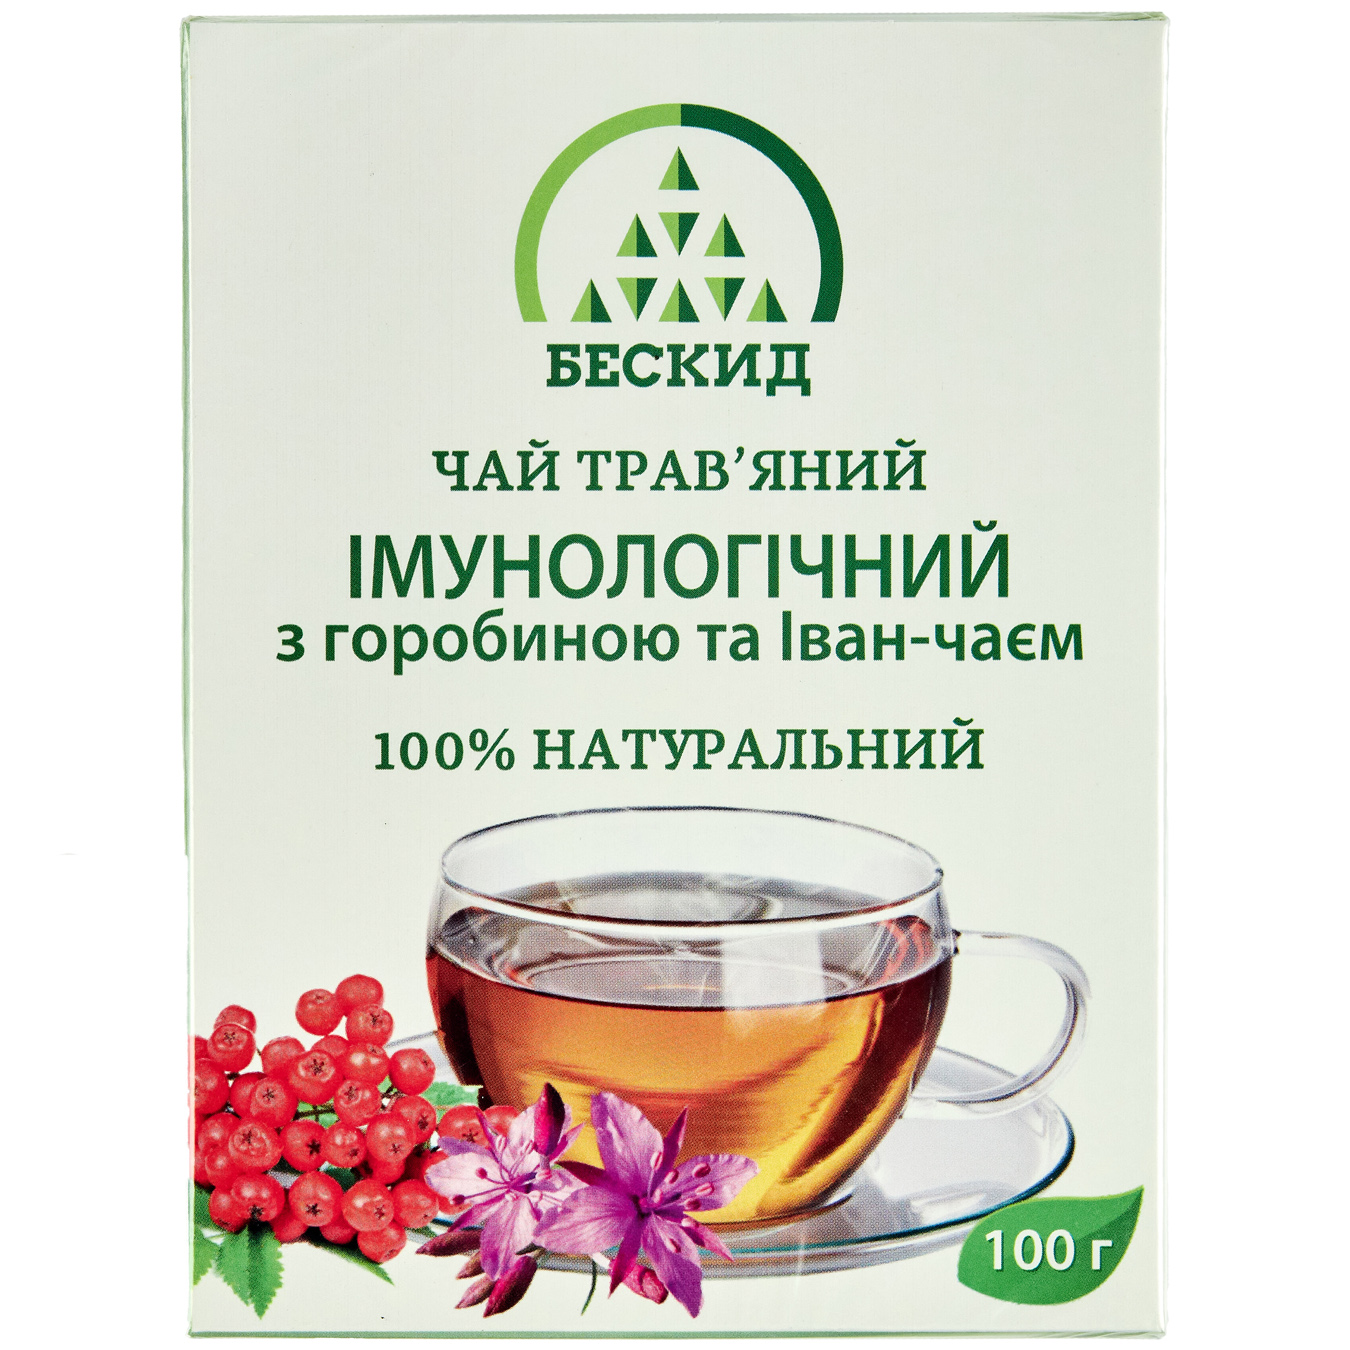 Herbal tea Beskyd Immunological with mountain ash and Ivan tea 100g